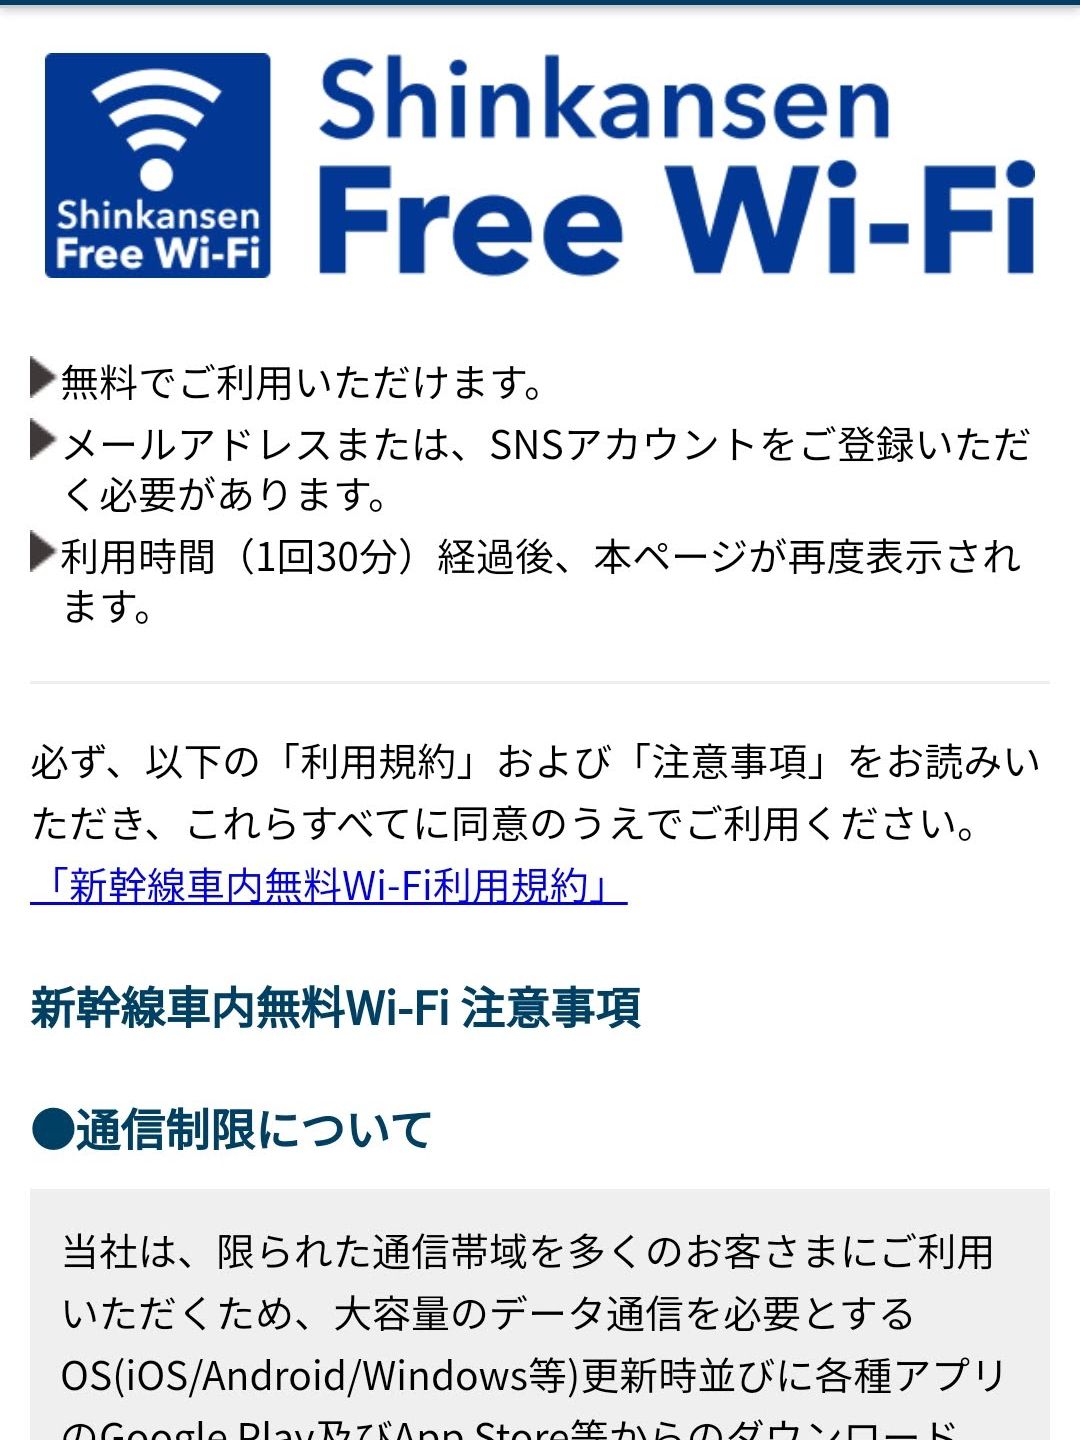 Shinkansen Free Wi-Fi